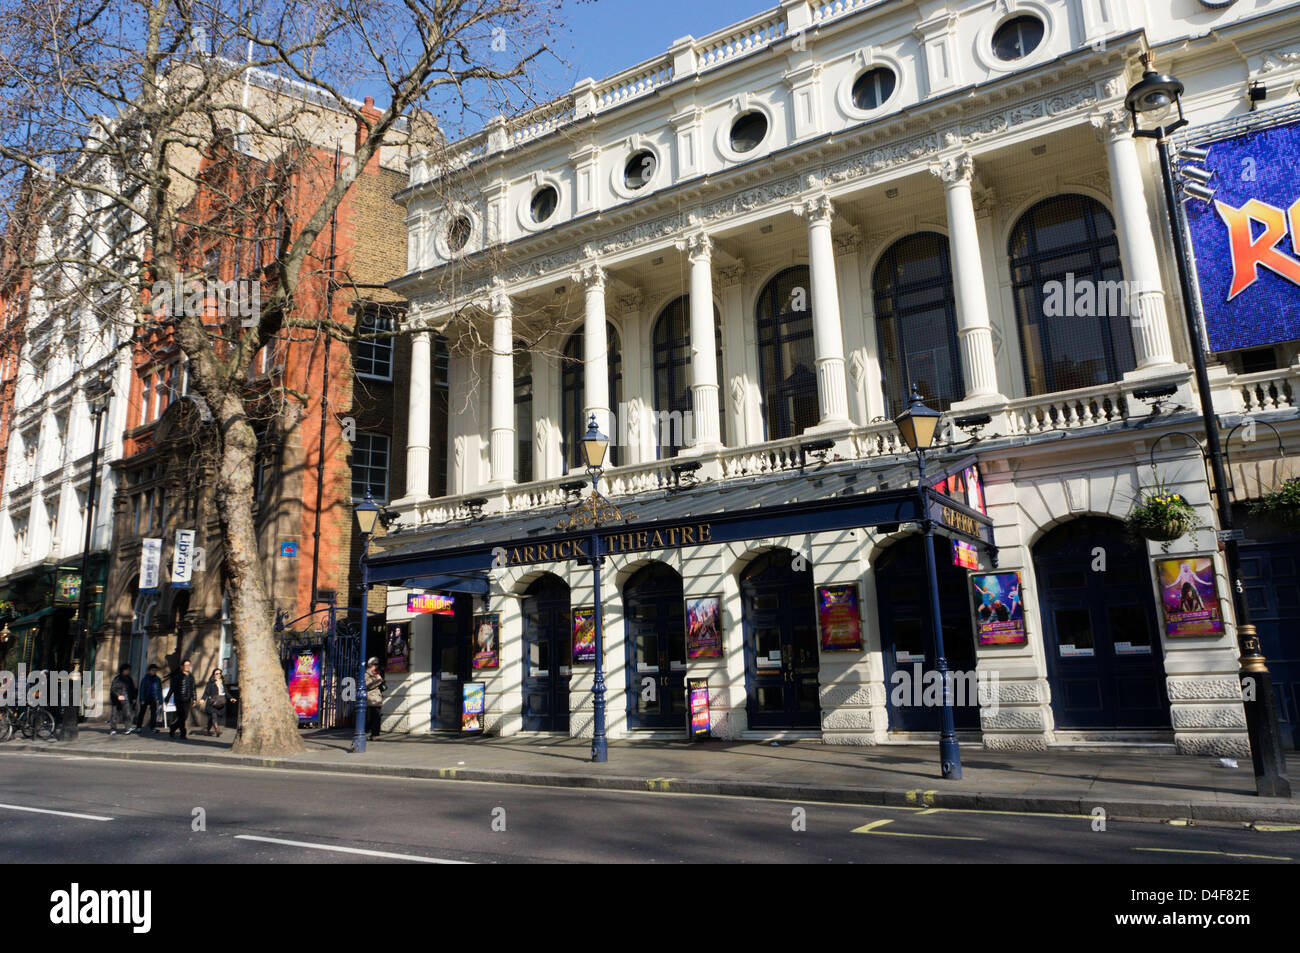 Garrick Theatre in Charing Cross Road, London. Stock Photo